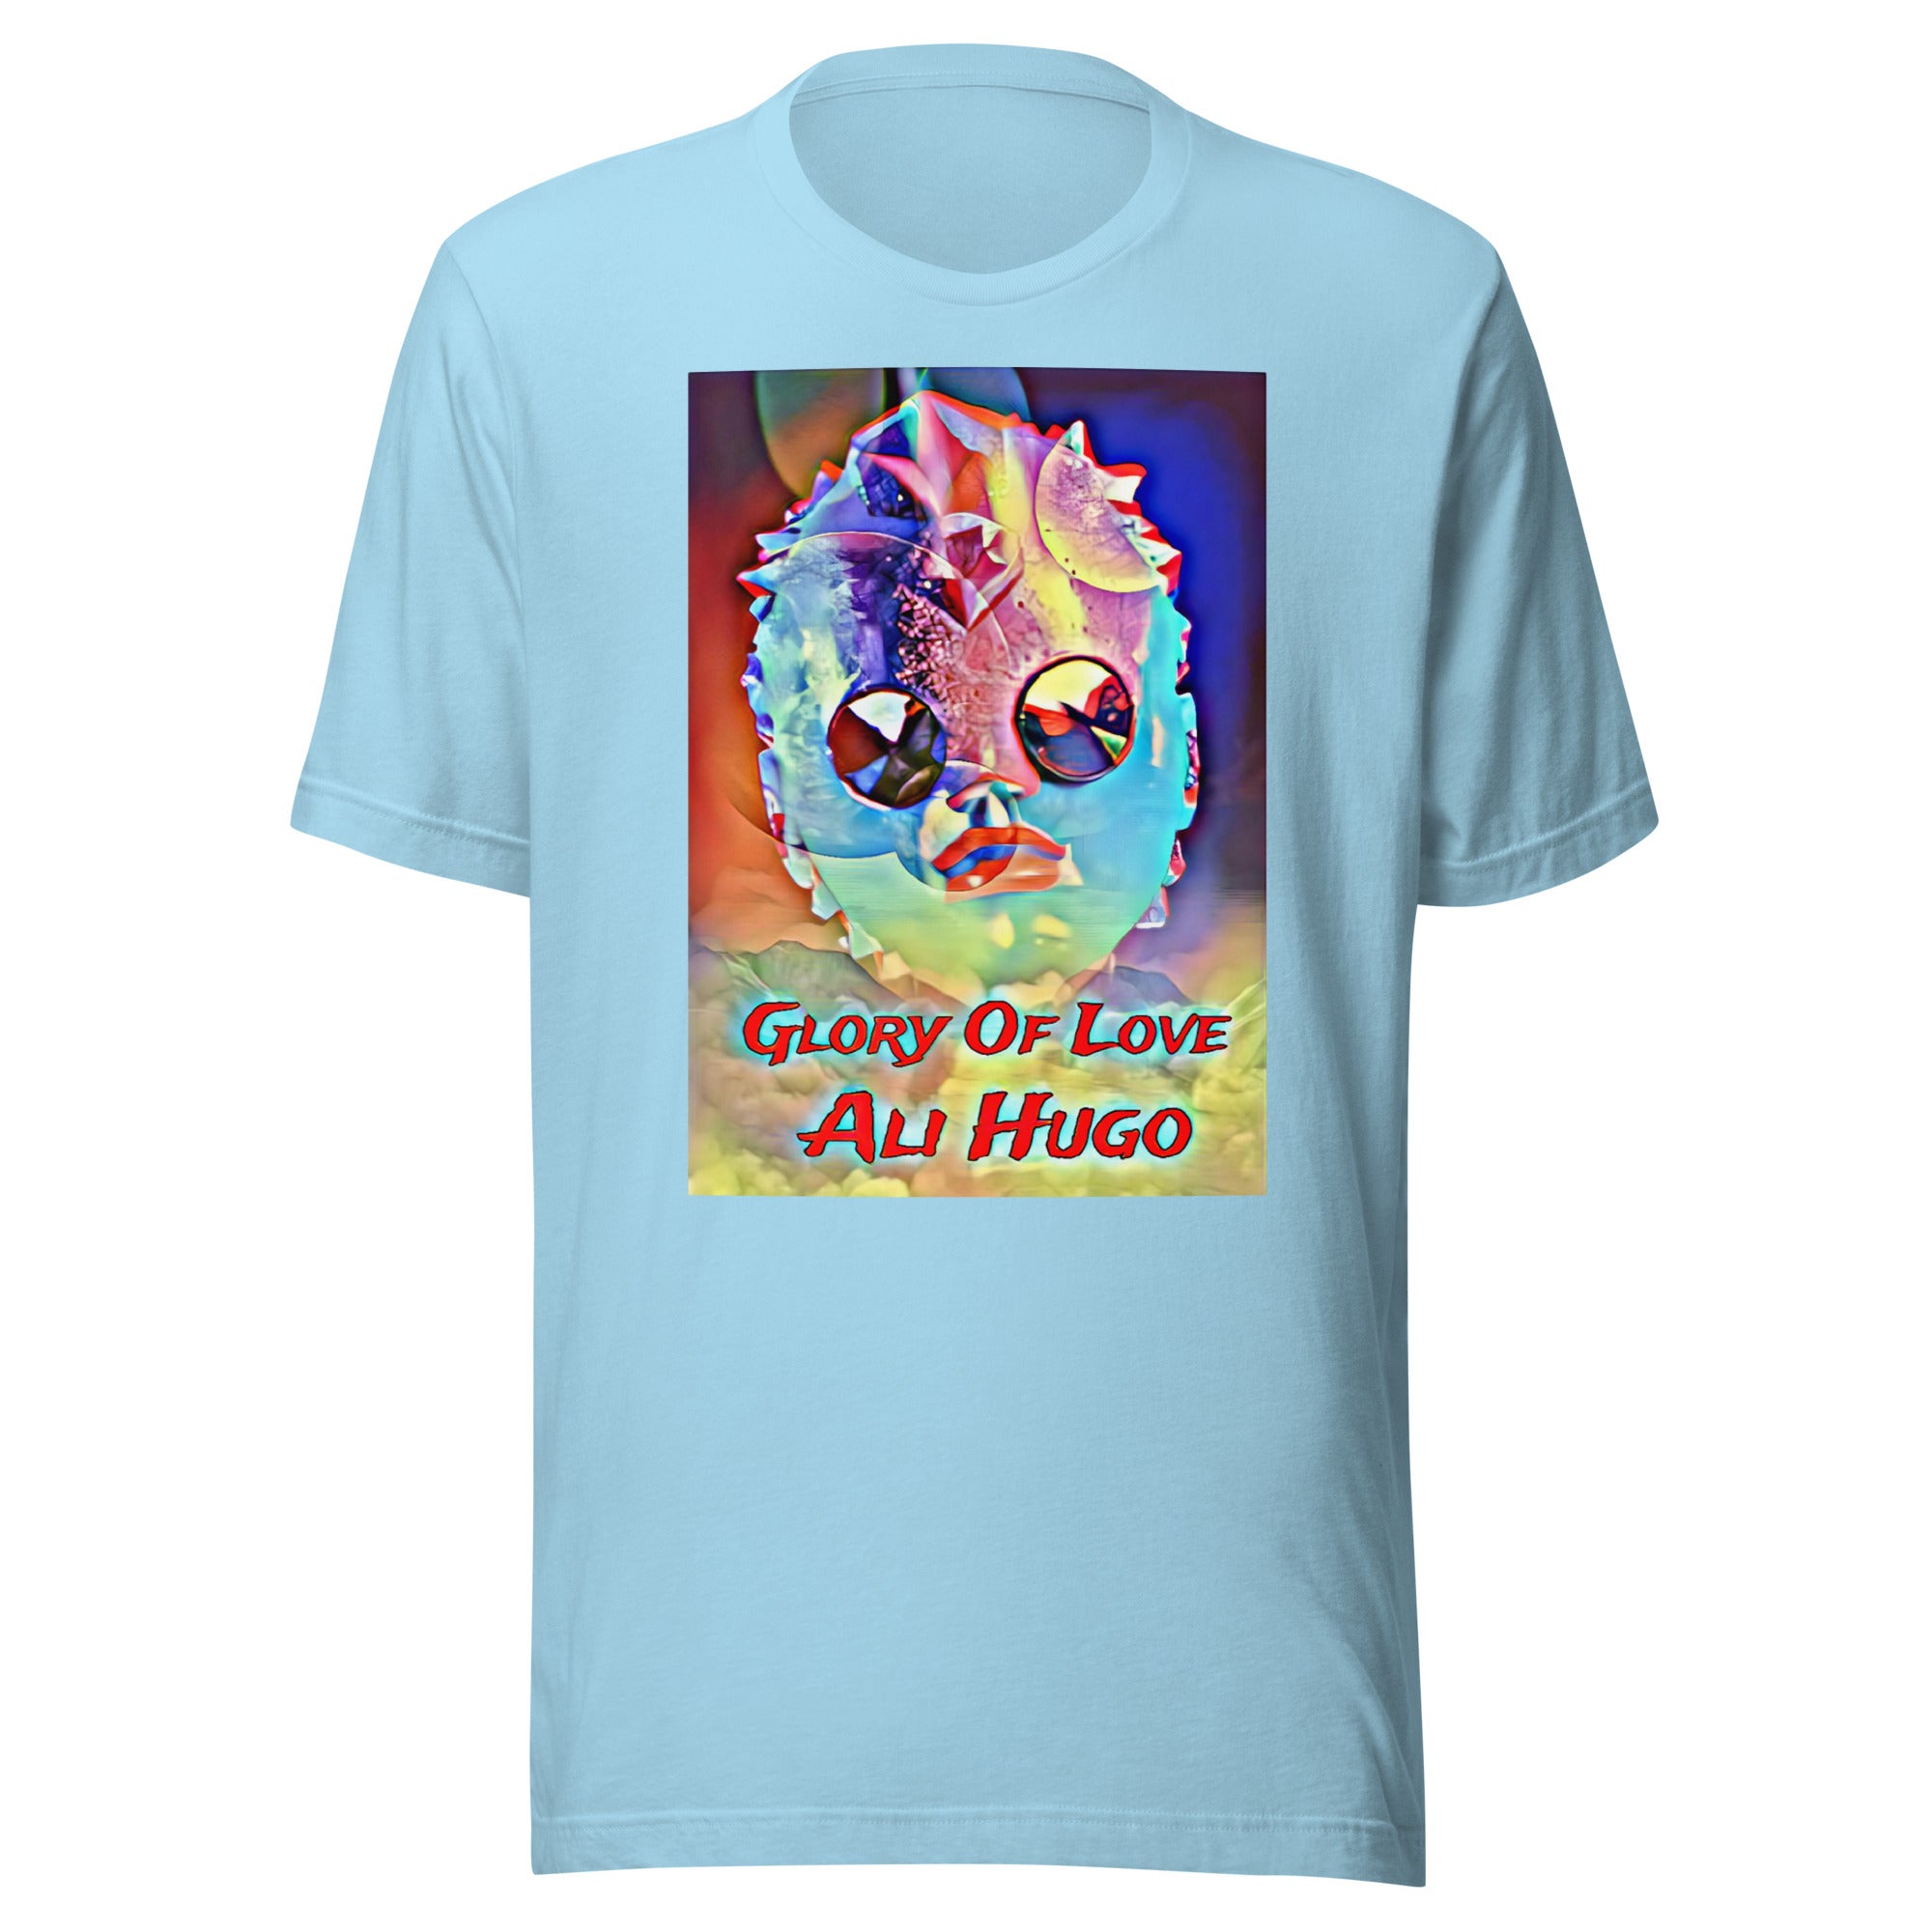 Ali Hugo - "Glory Of Love" - Unisex t-shirt